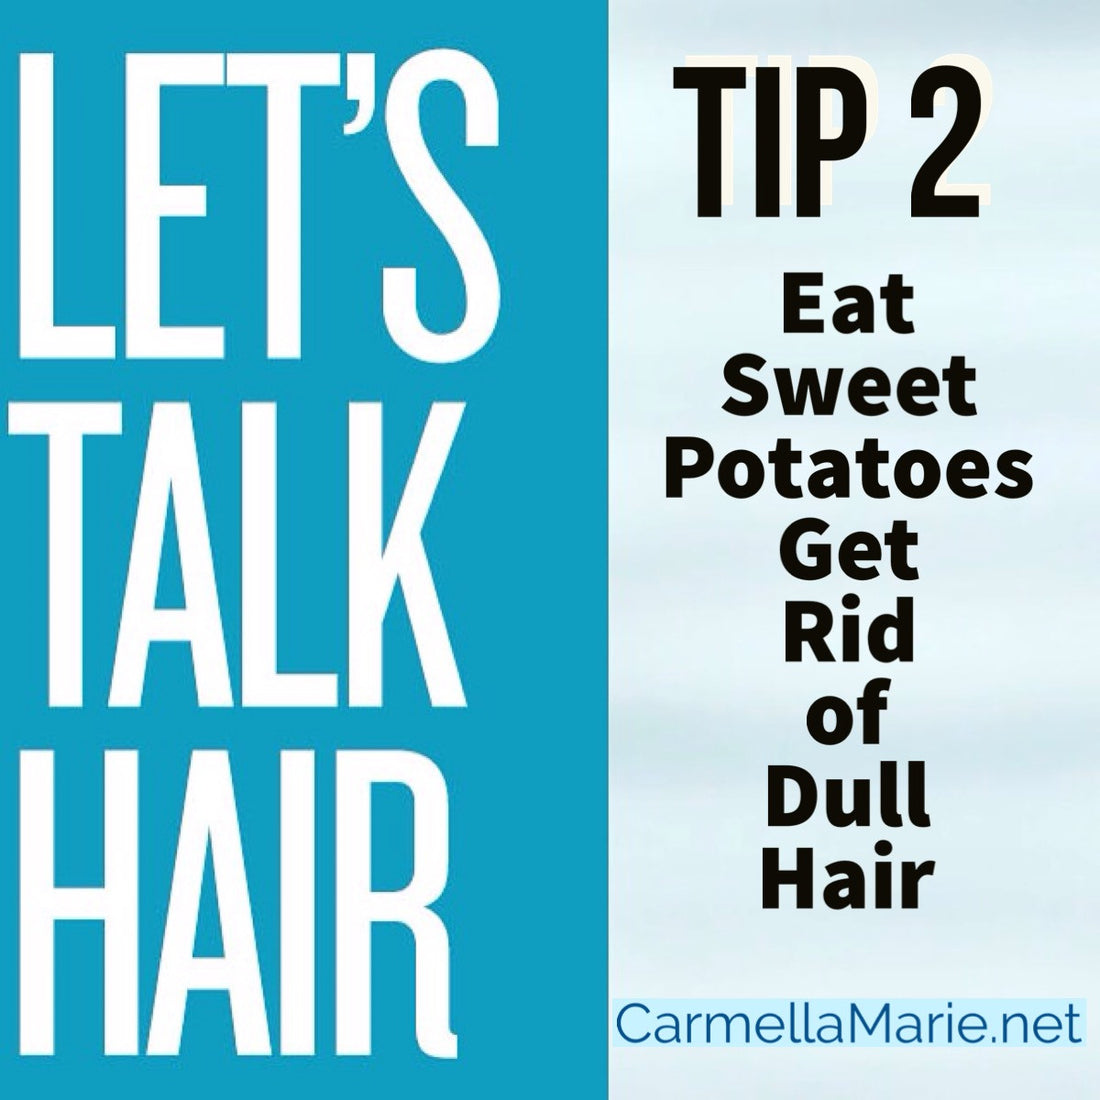 Winter Hair Tip #2: Eat Sweet Potatoes